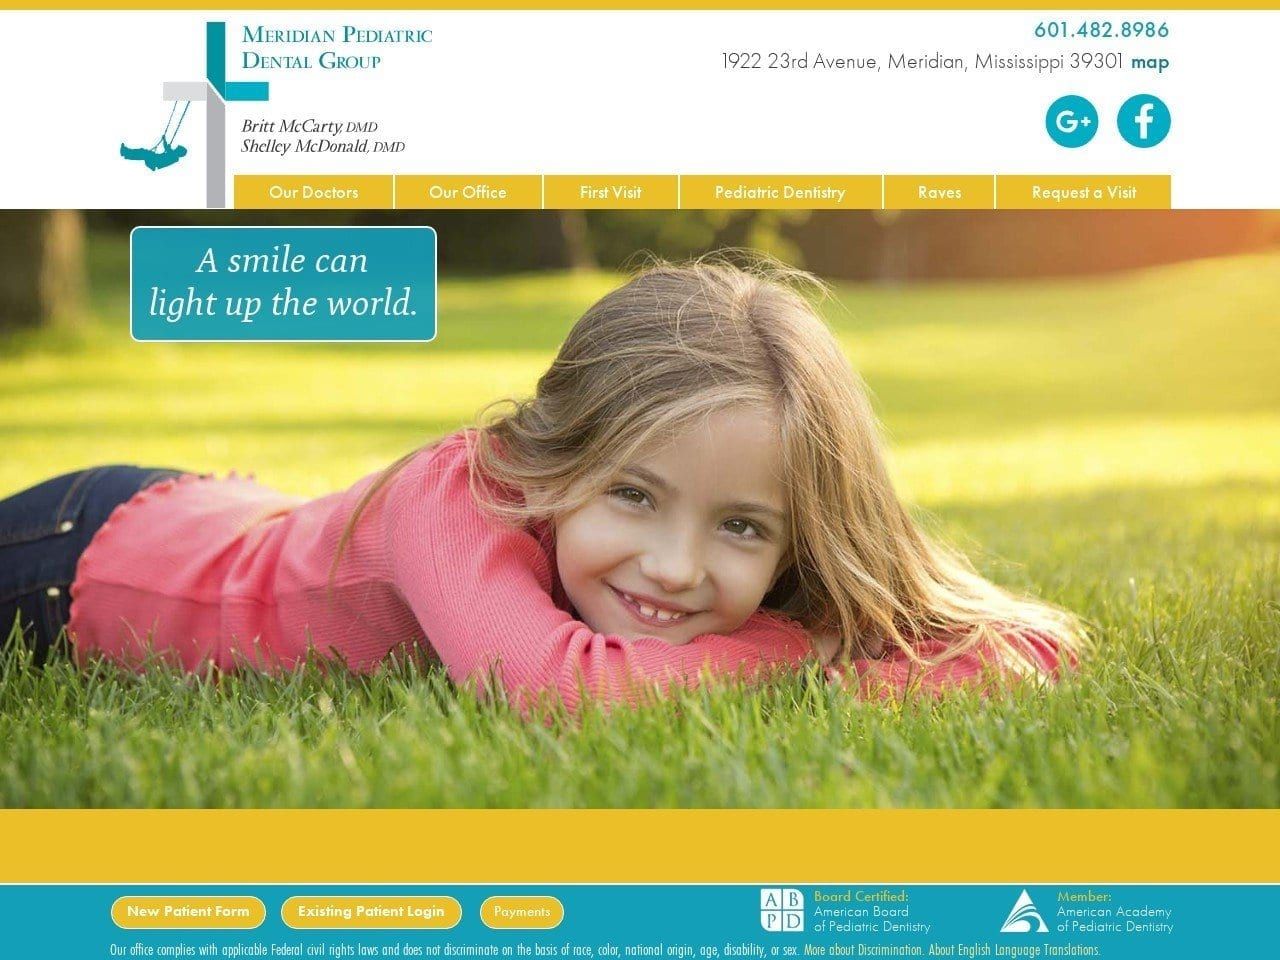 Meridian Pediatric Dental Group Website Screenshot from drbrittmccarty.com